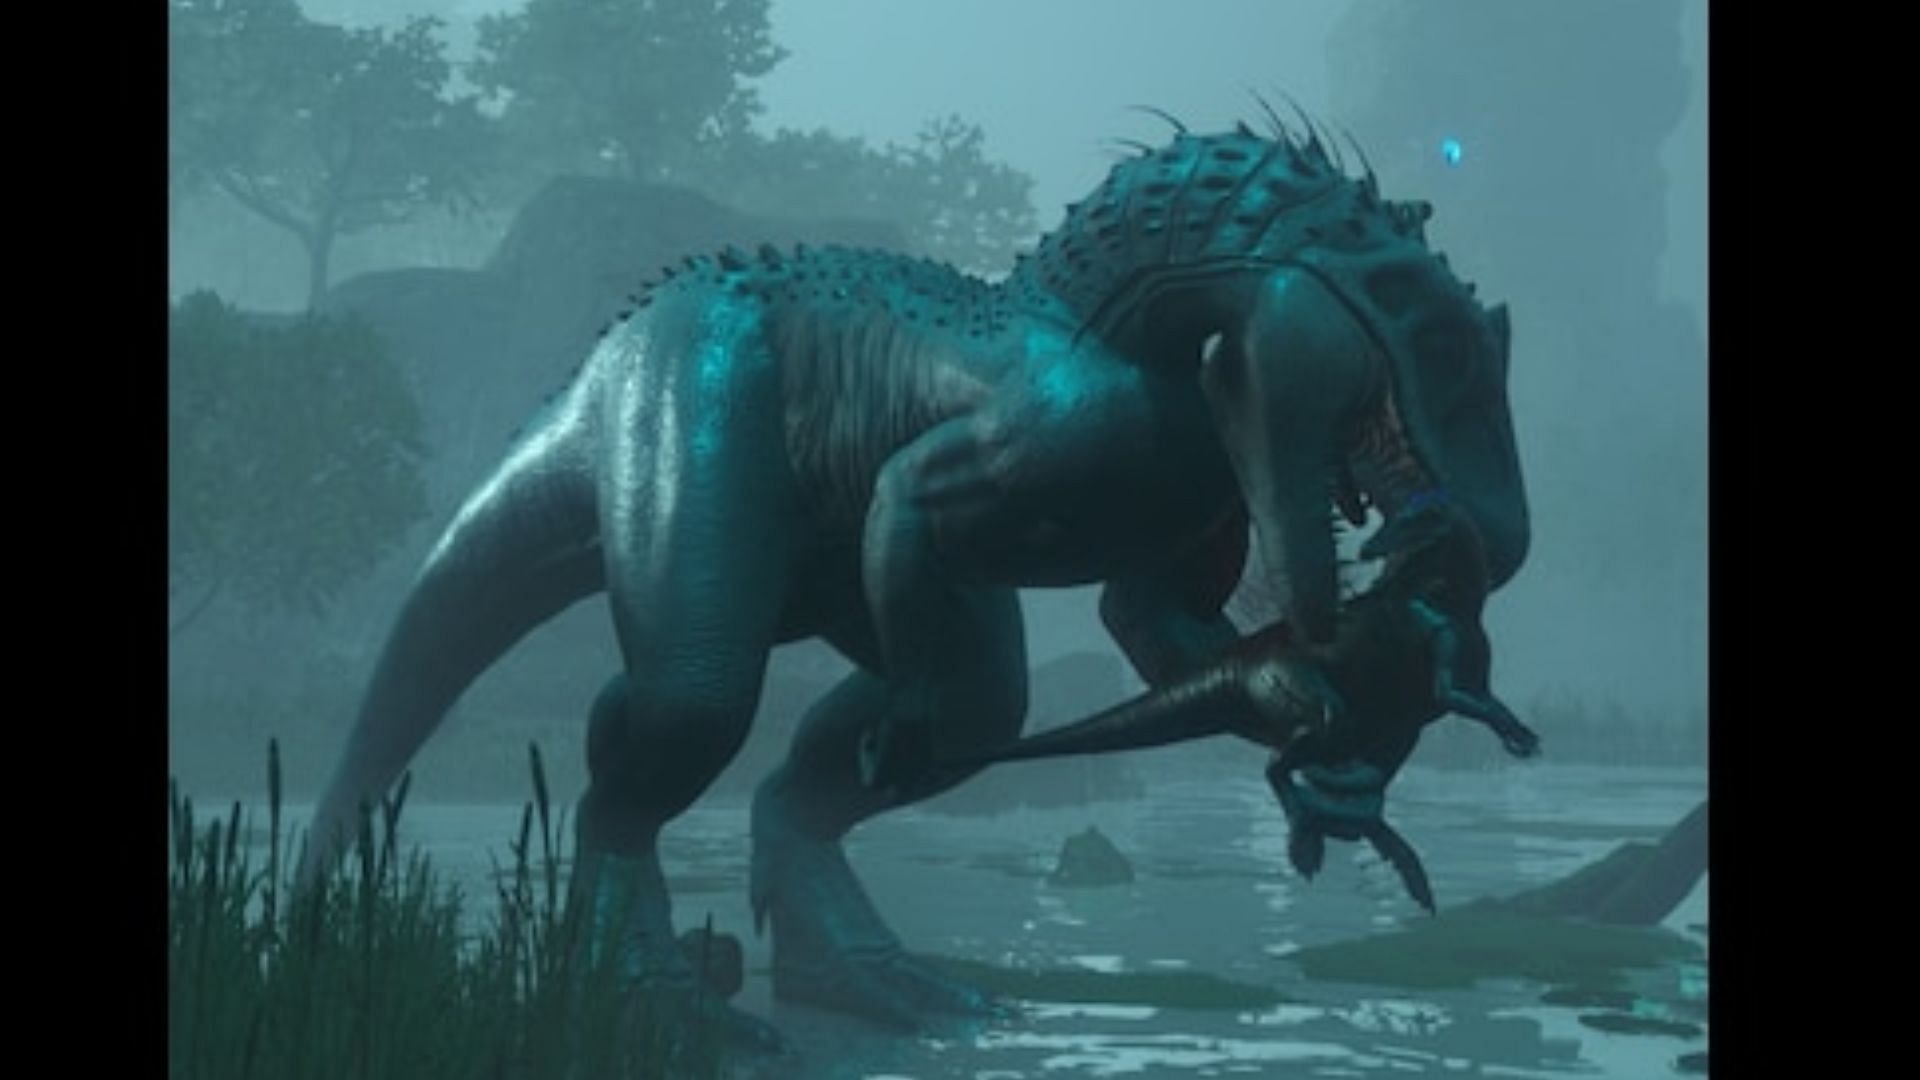 Moro Rex is one of the deadliest creature mods in the title (Image via Studio Wildcard)